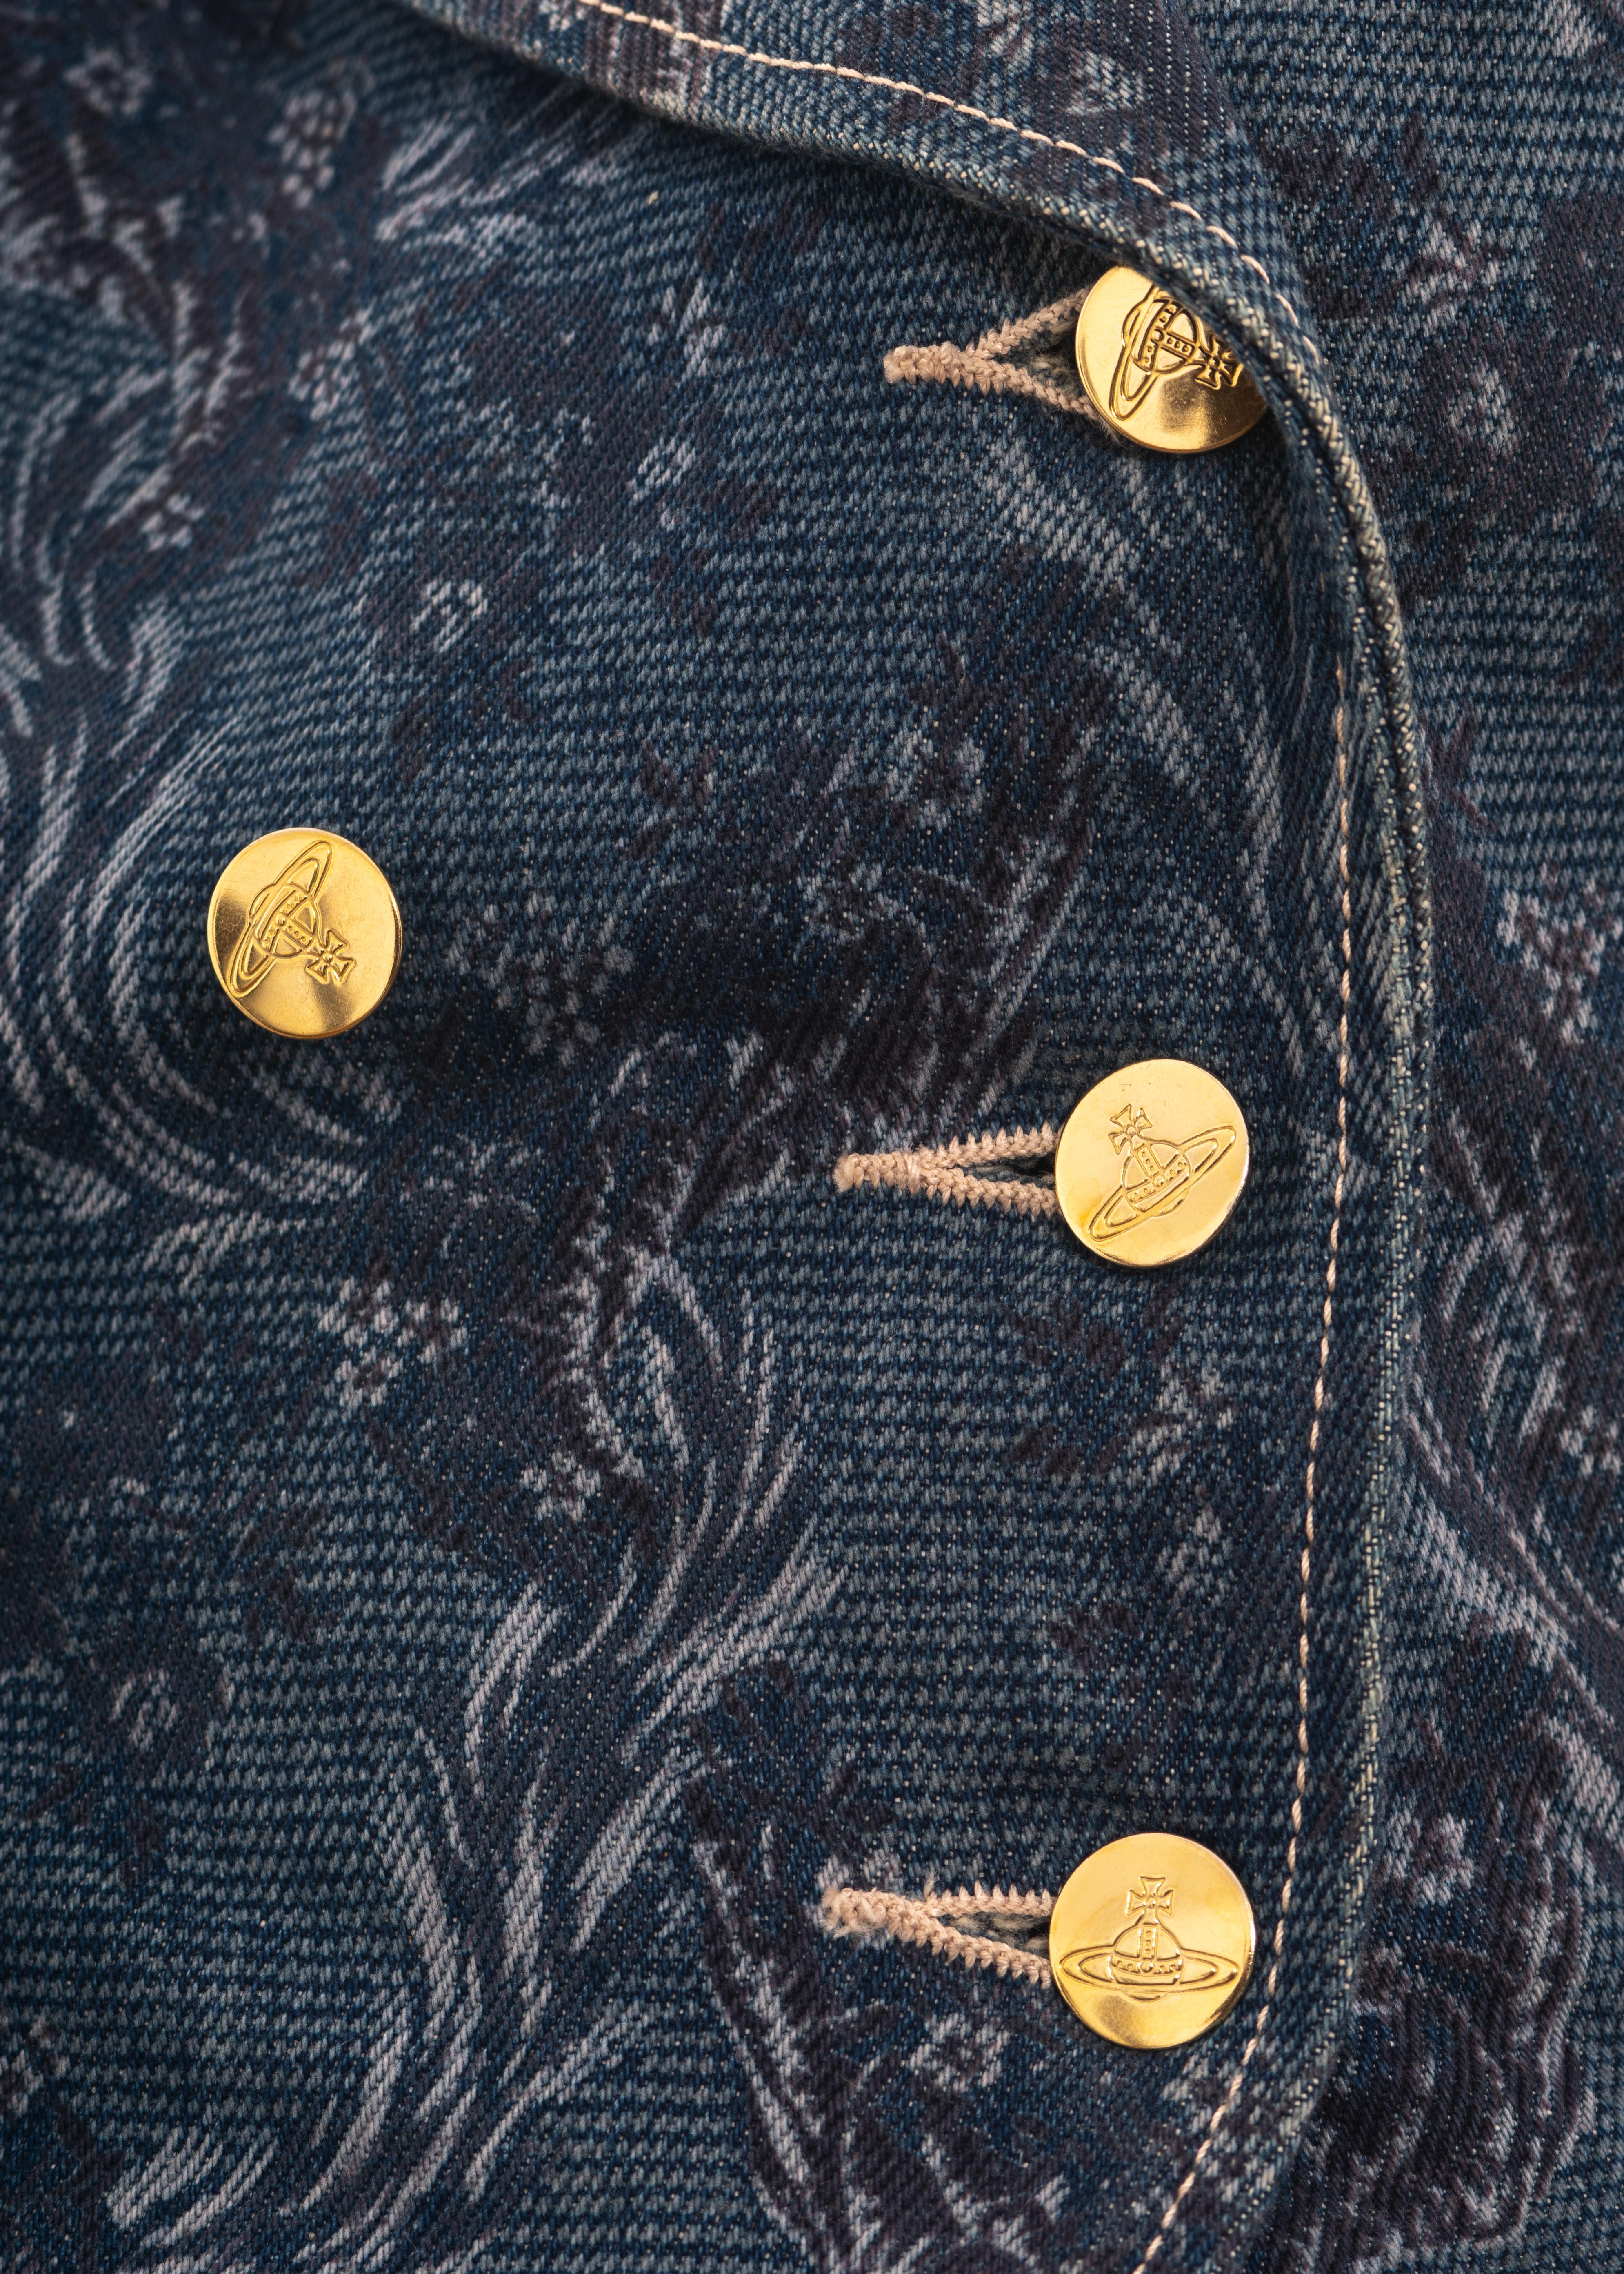 Black Vivienne Westwood blue denim jacquard peplum jacket skirt suit, fw 1996 For Sale